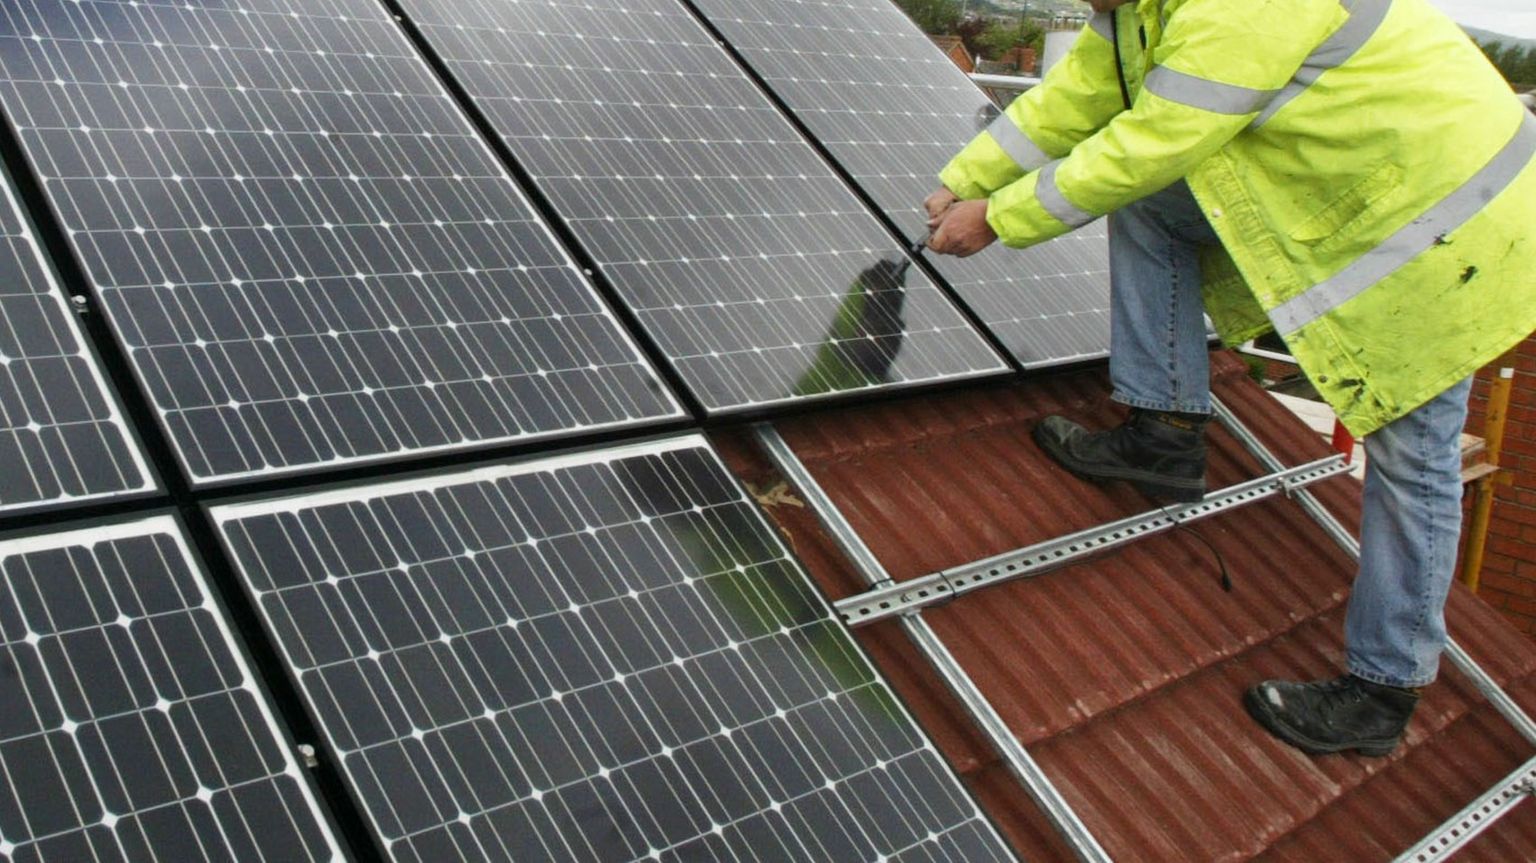 Man installs solar panels on roof